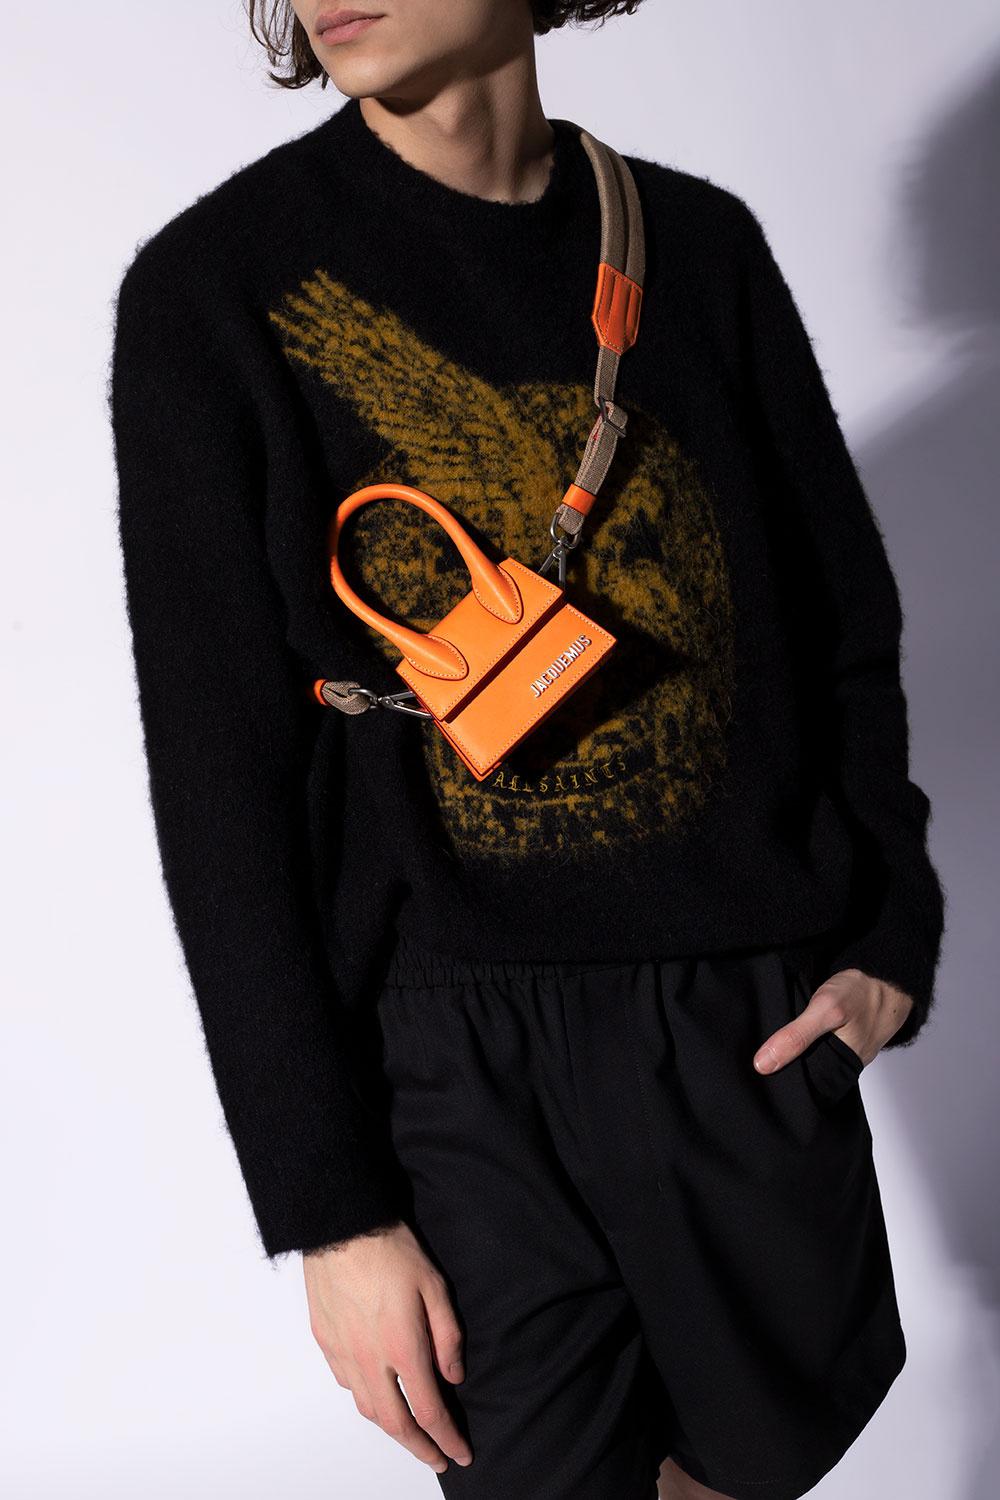 Jacquemus 'le Chiquito' Shoulder Bag Orange for Men | Lyst